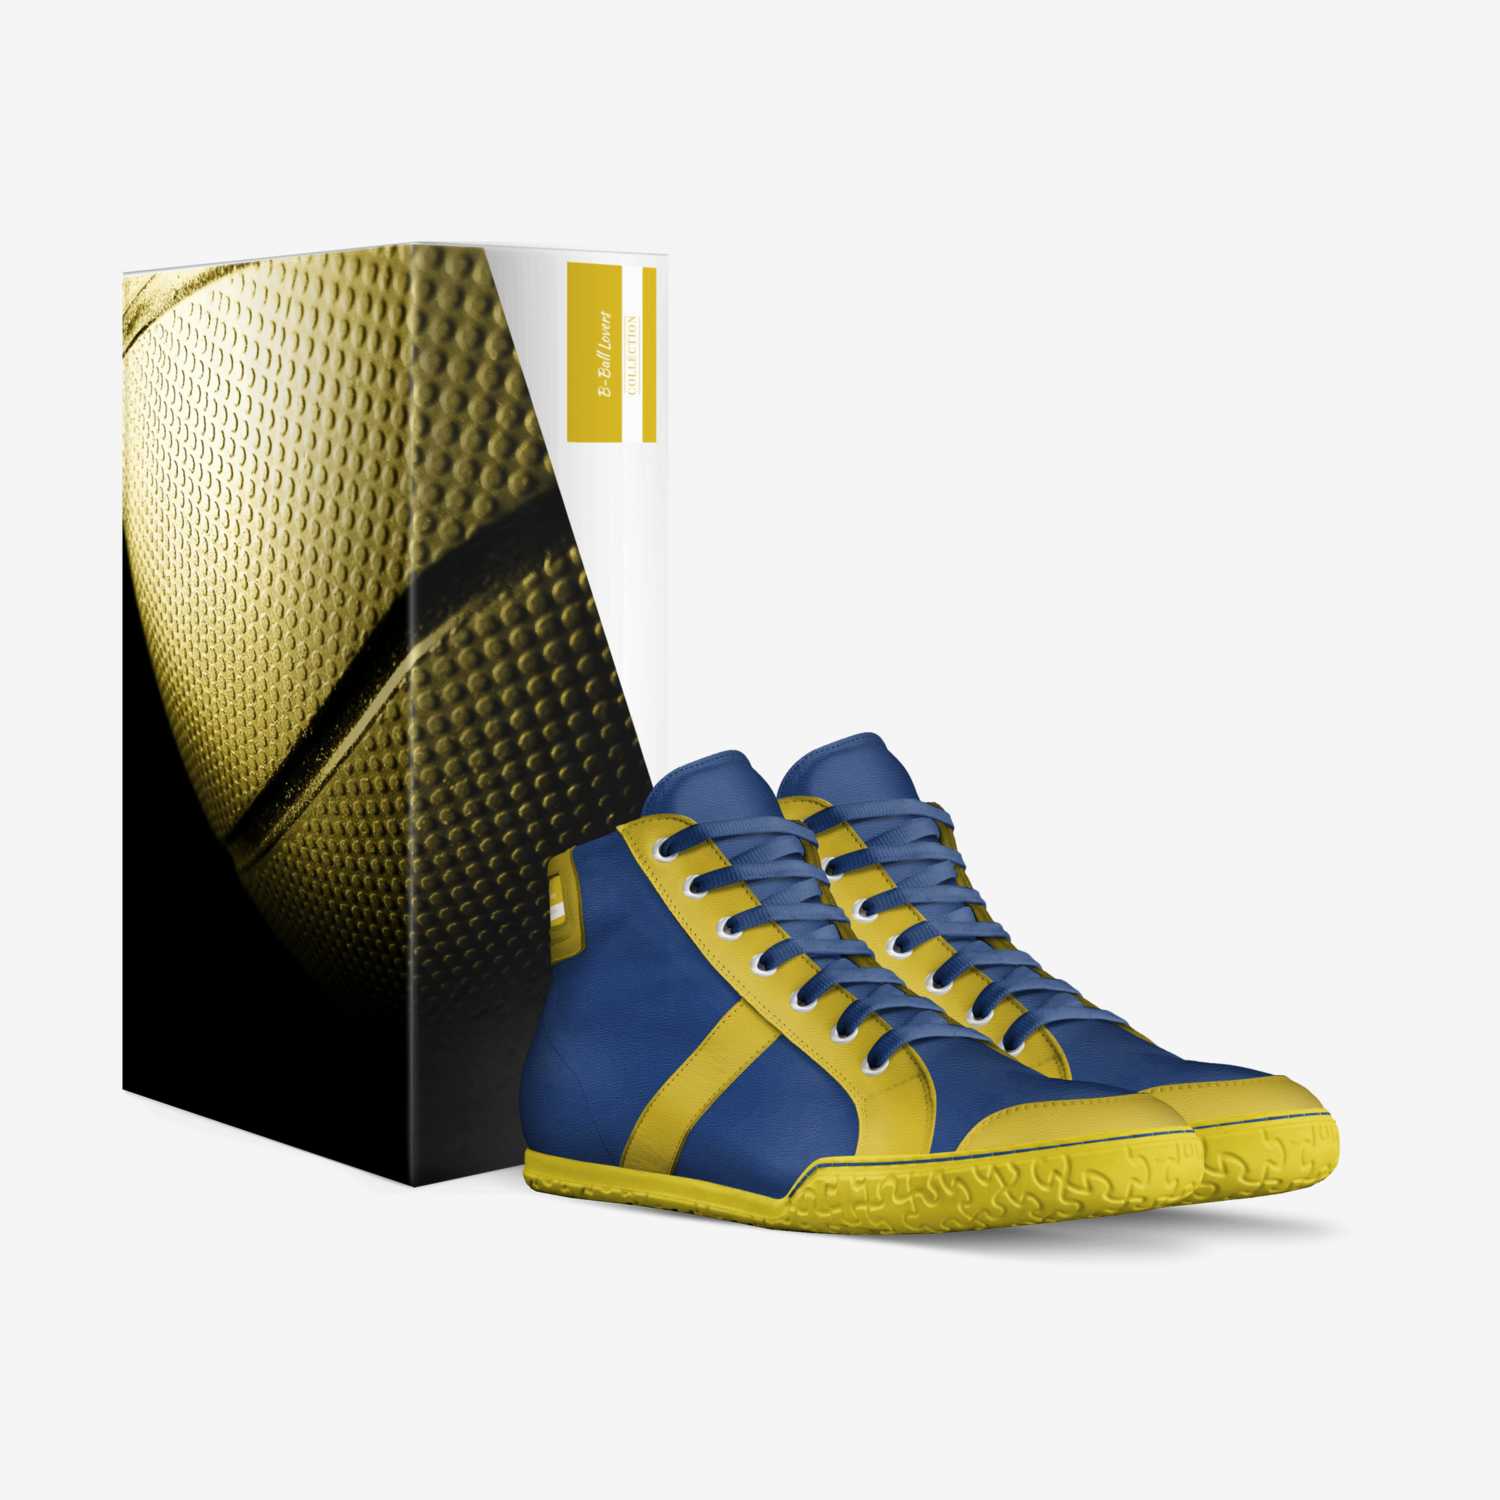 Ball Lovers  custom made in Italy shoes by Natasha Robinson | Box view